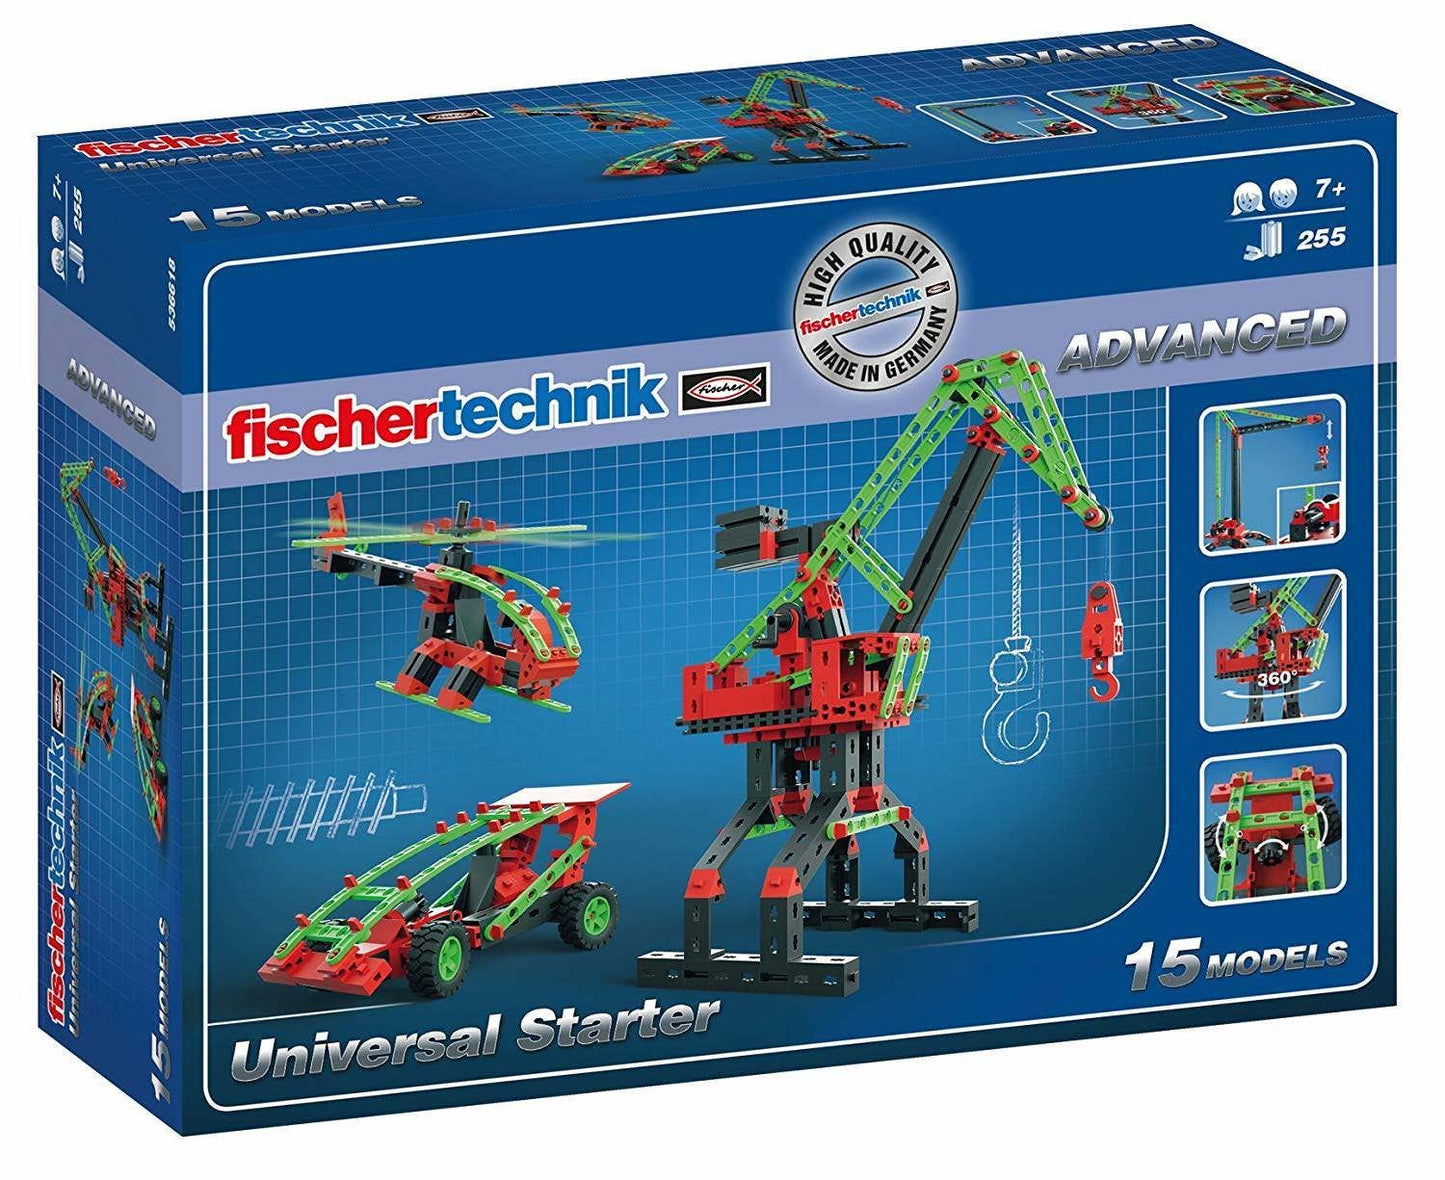 Fischertechnik Universal Starter Construction Set